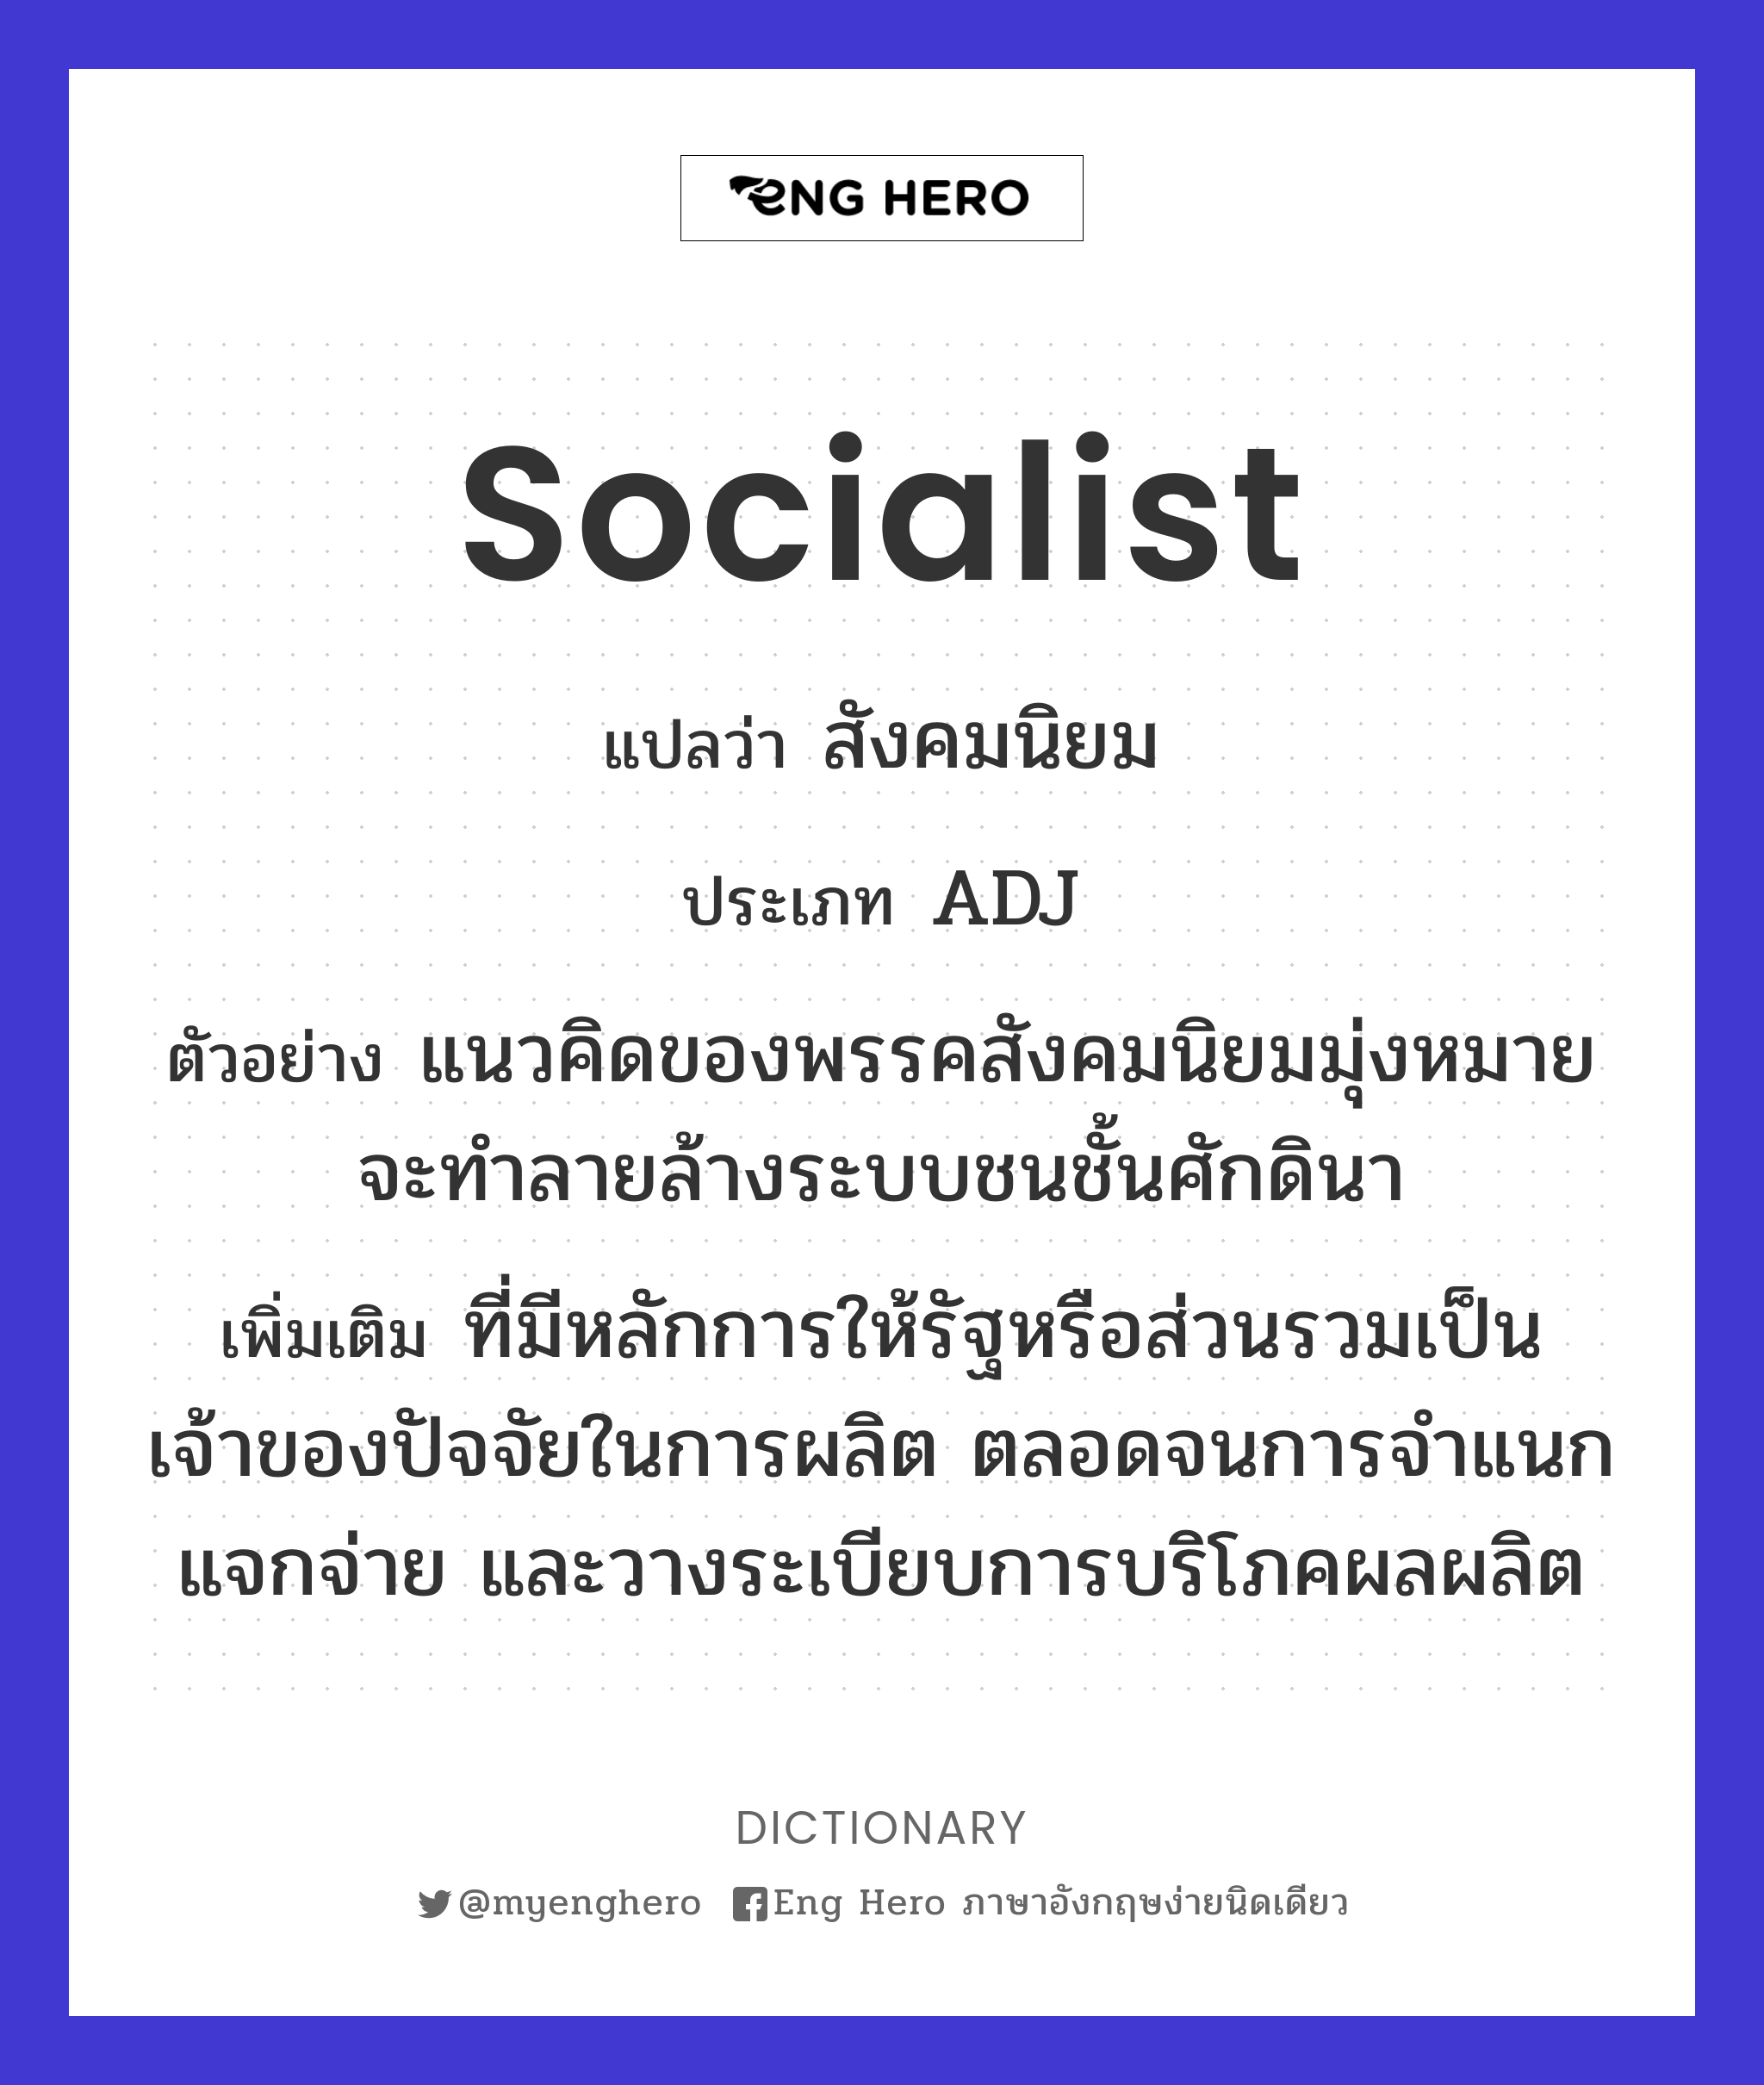 socialist